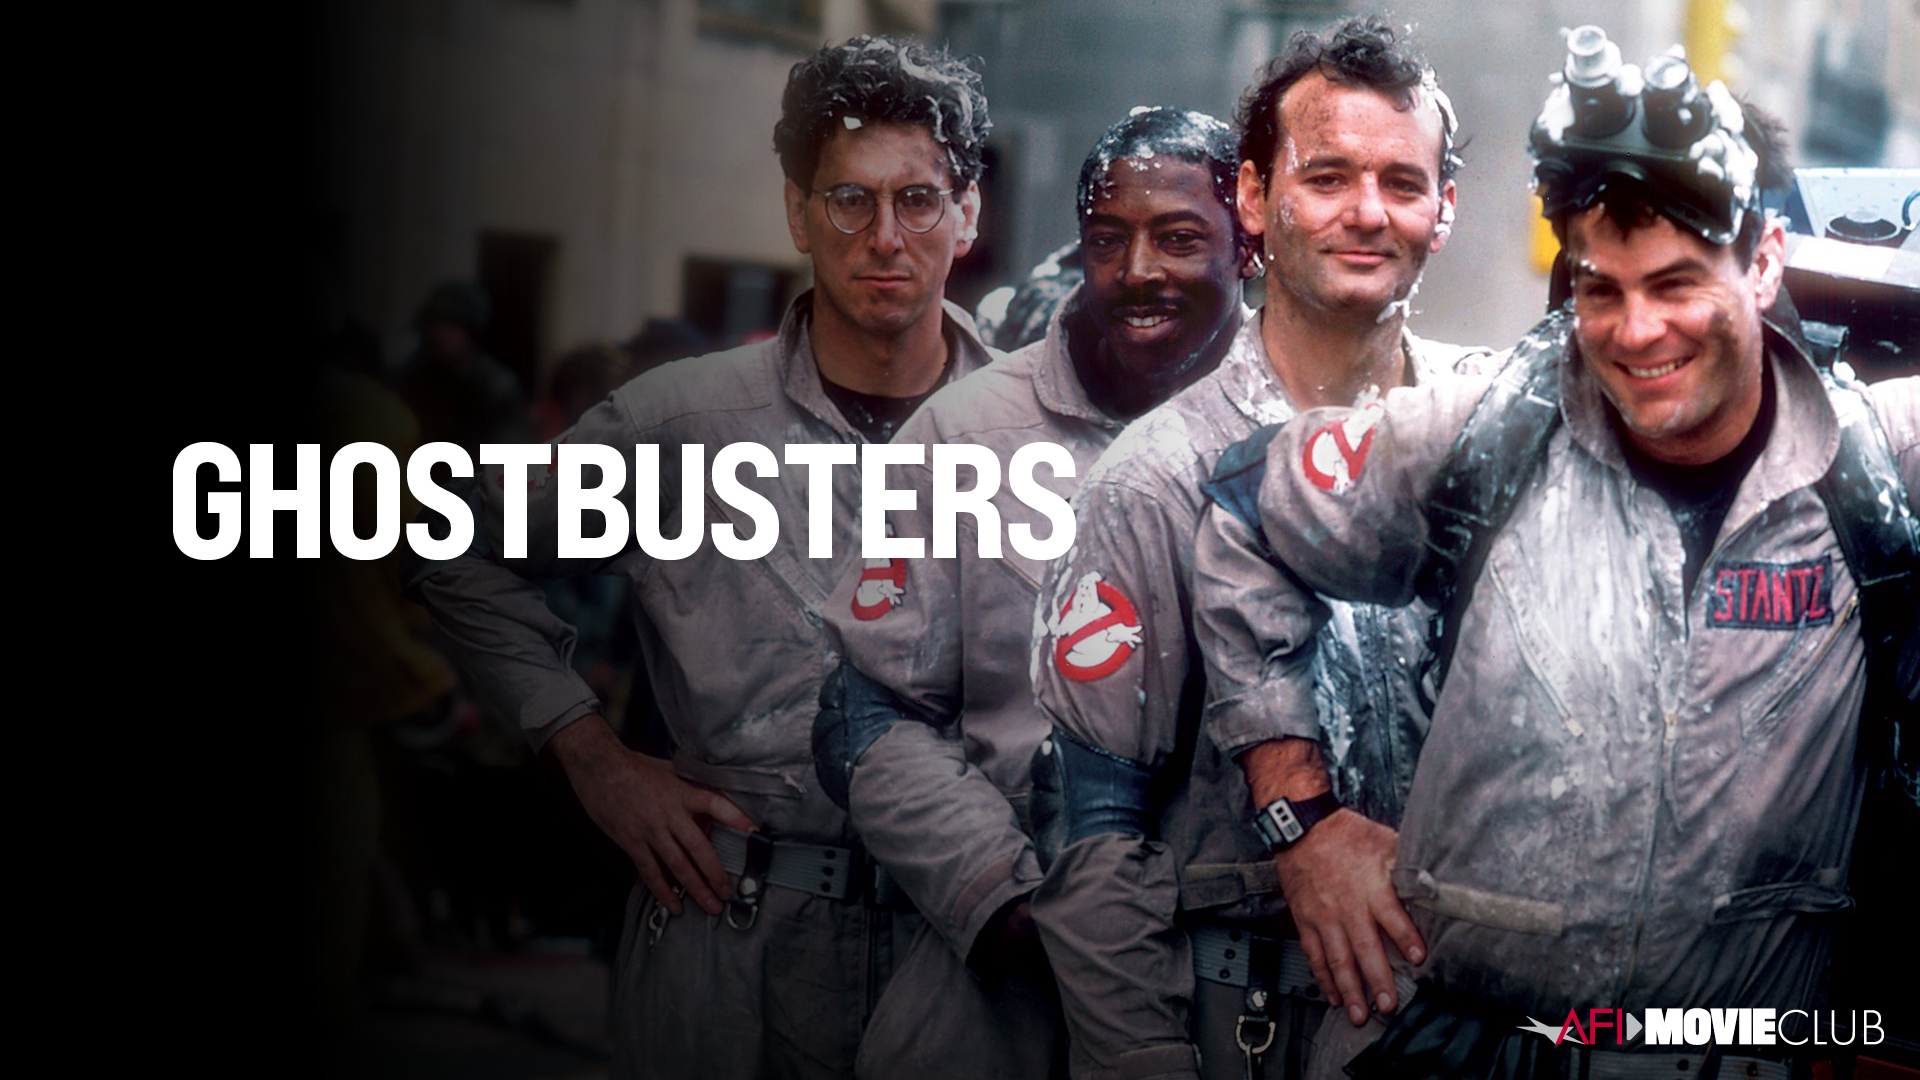 Ghostbuster Film Still - Dan Aykroyd, Bill Murray, Harold Ramis, and Ernie Hudson